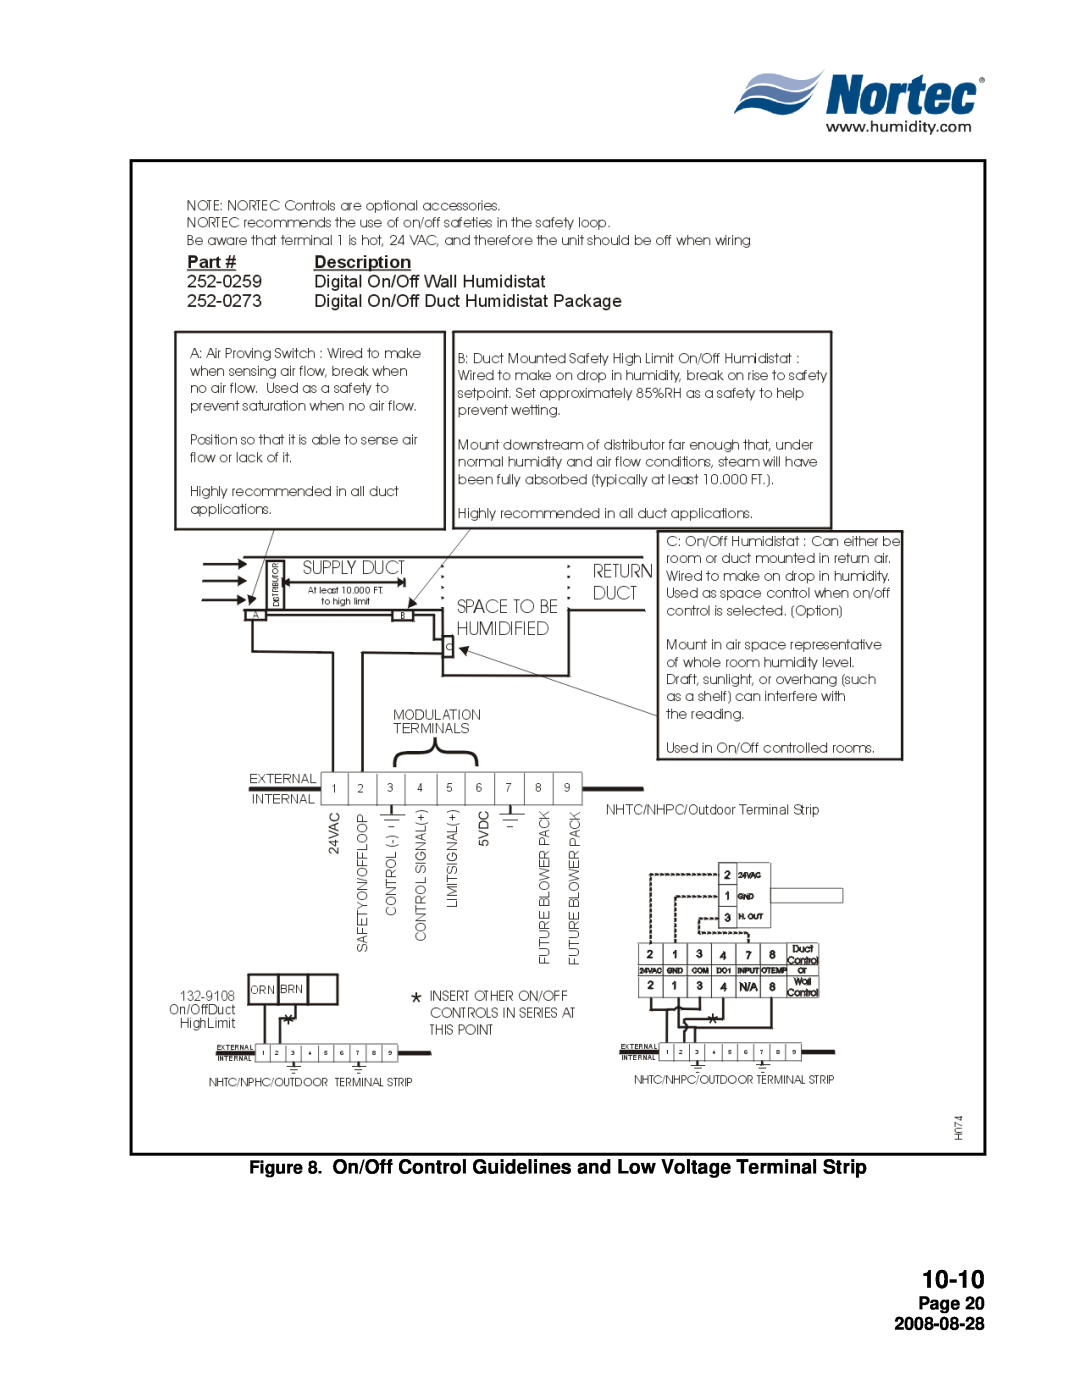 Nortec NH Series installation manual 10-10, Page 